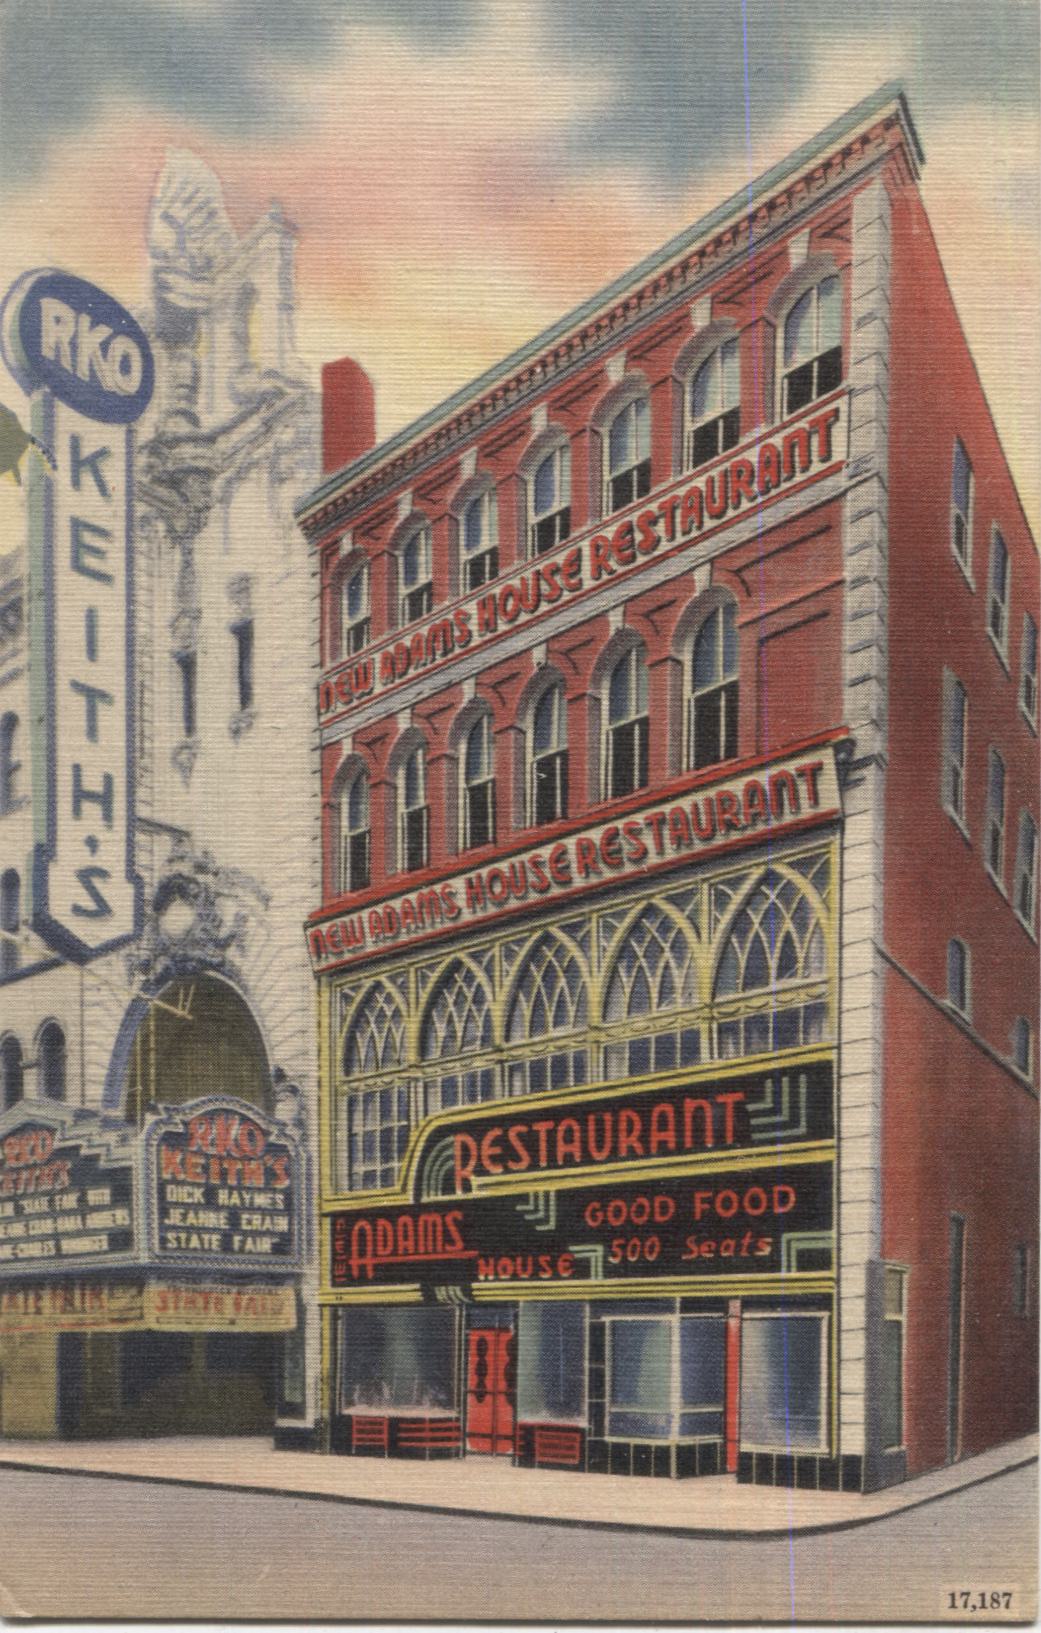 The New Adams House Restaraunt, Washington Street, Boston, MA Vintage Postcard